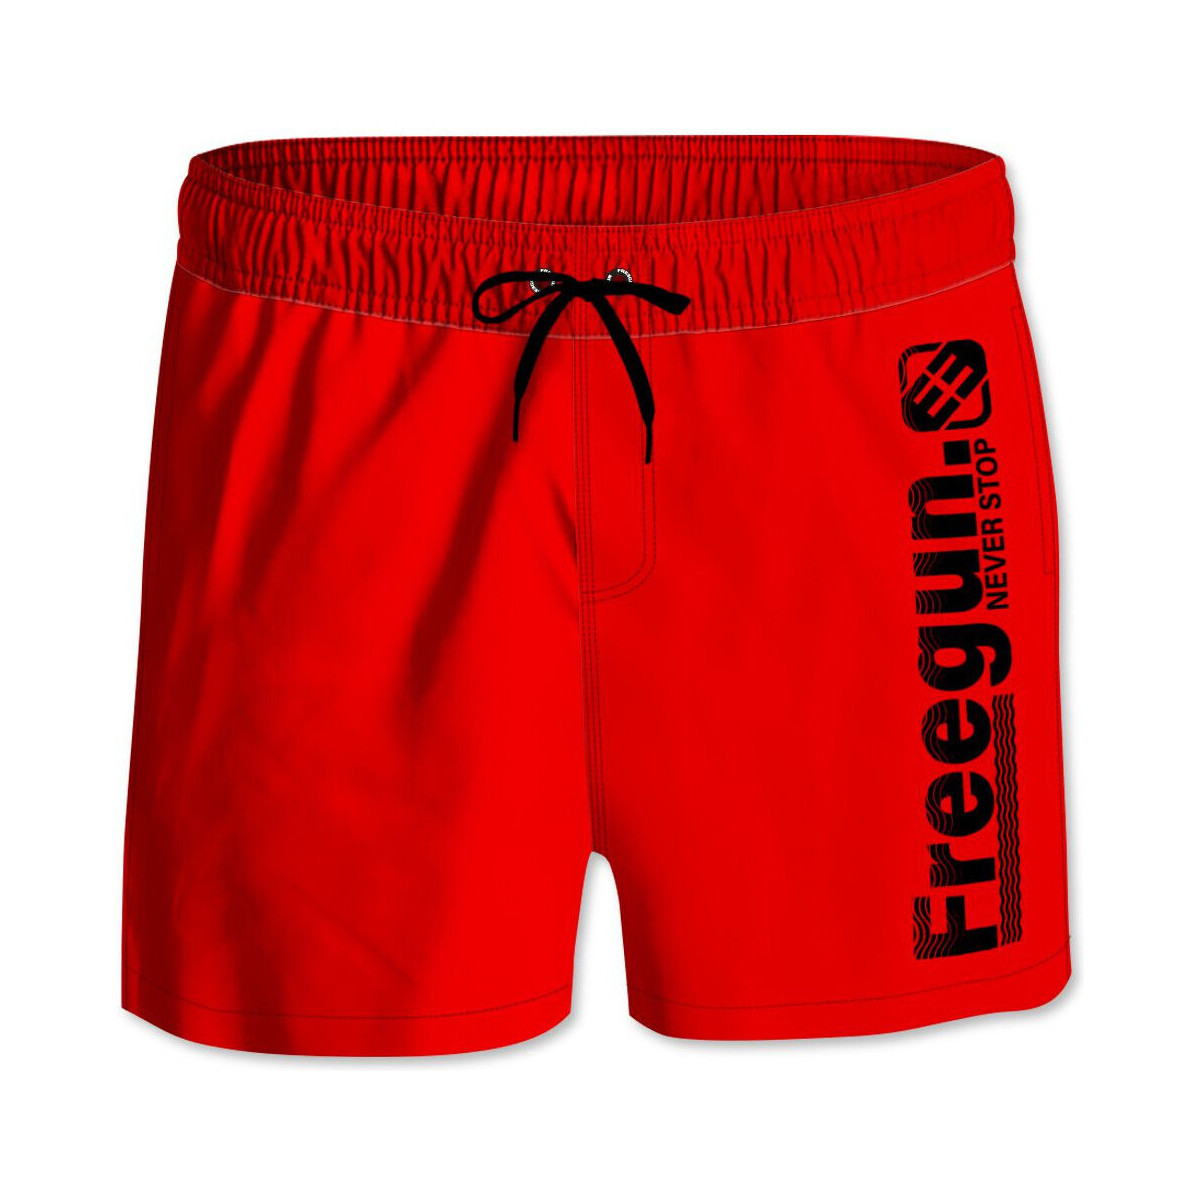 Vêtements Garçon Maillots / Shorts de bain Freegun Boardshort court garçon avec ceinture demi-élastiquée Rouge